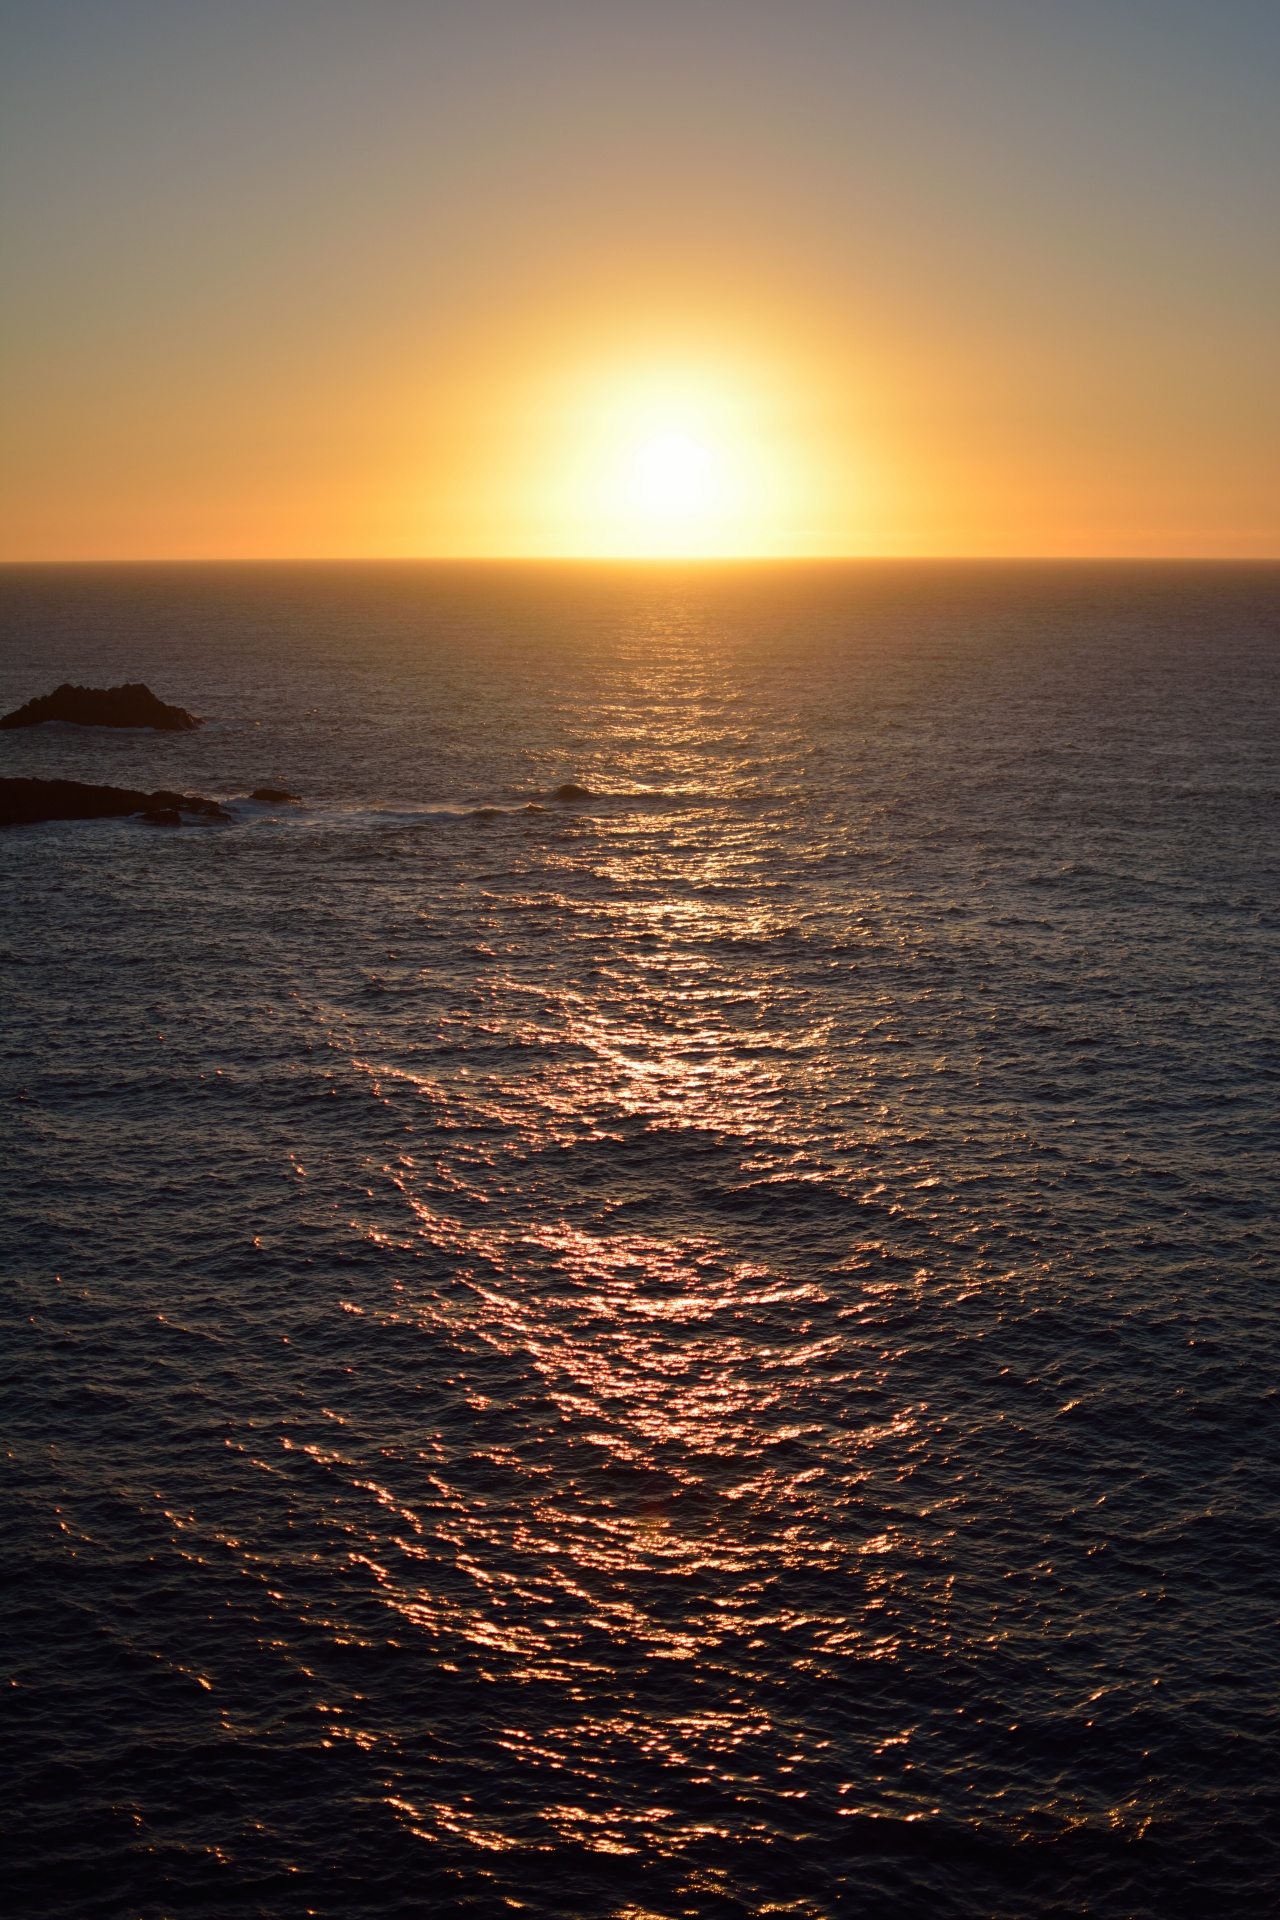 Sunset In The Atlantic Ocean